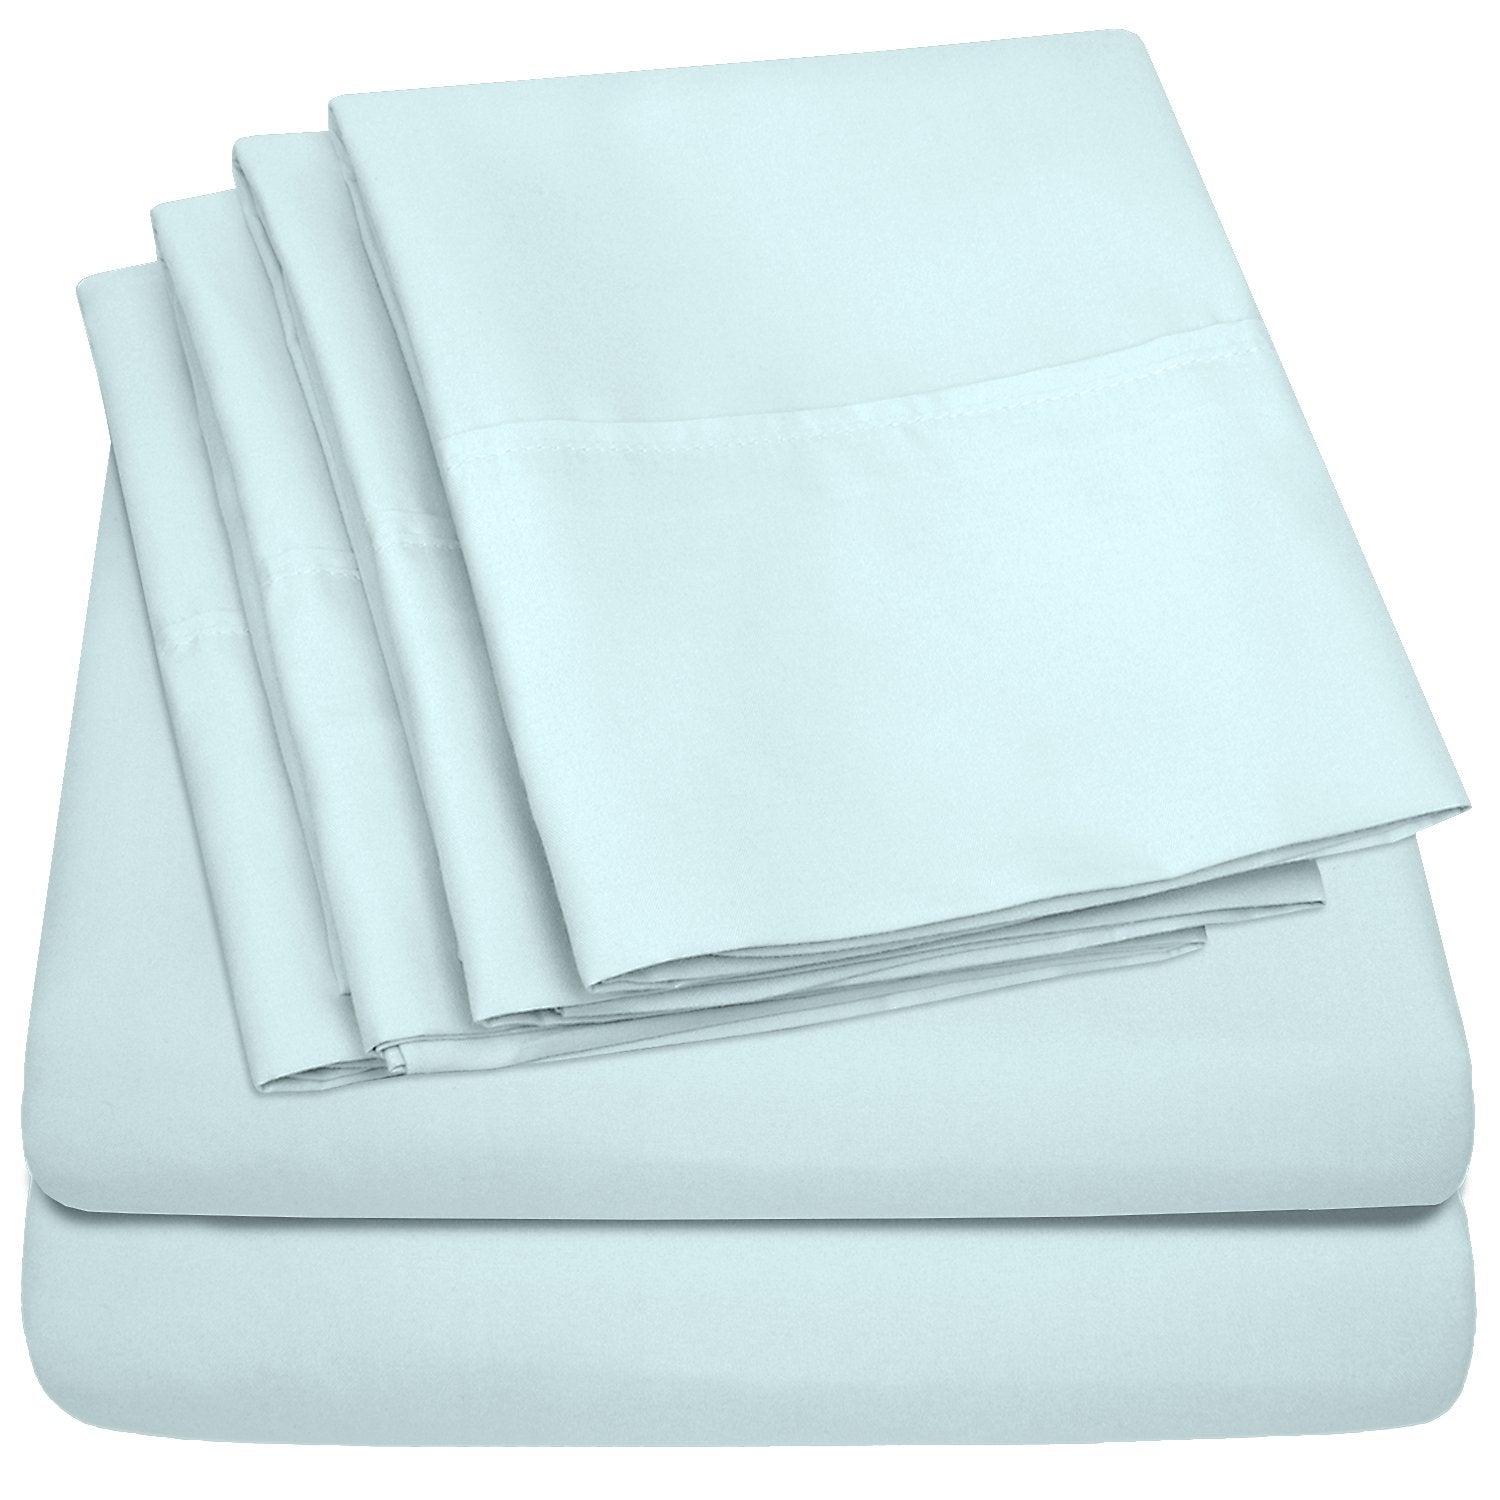 Deluxe 6-Piece Bed Sheet Set (Aqua) - Folded